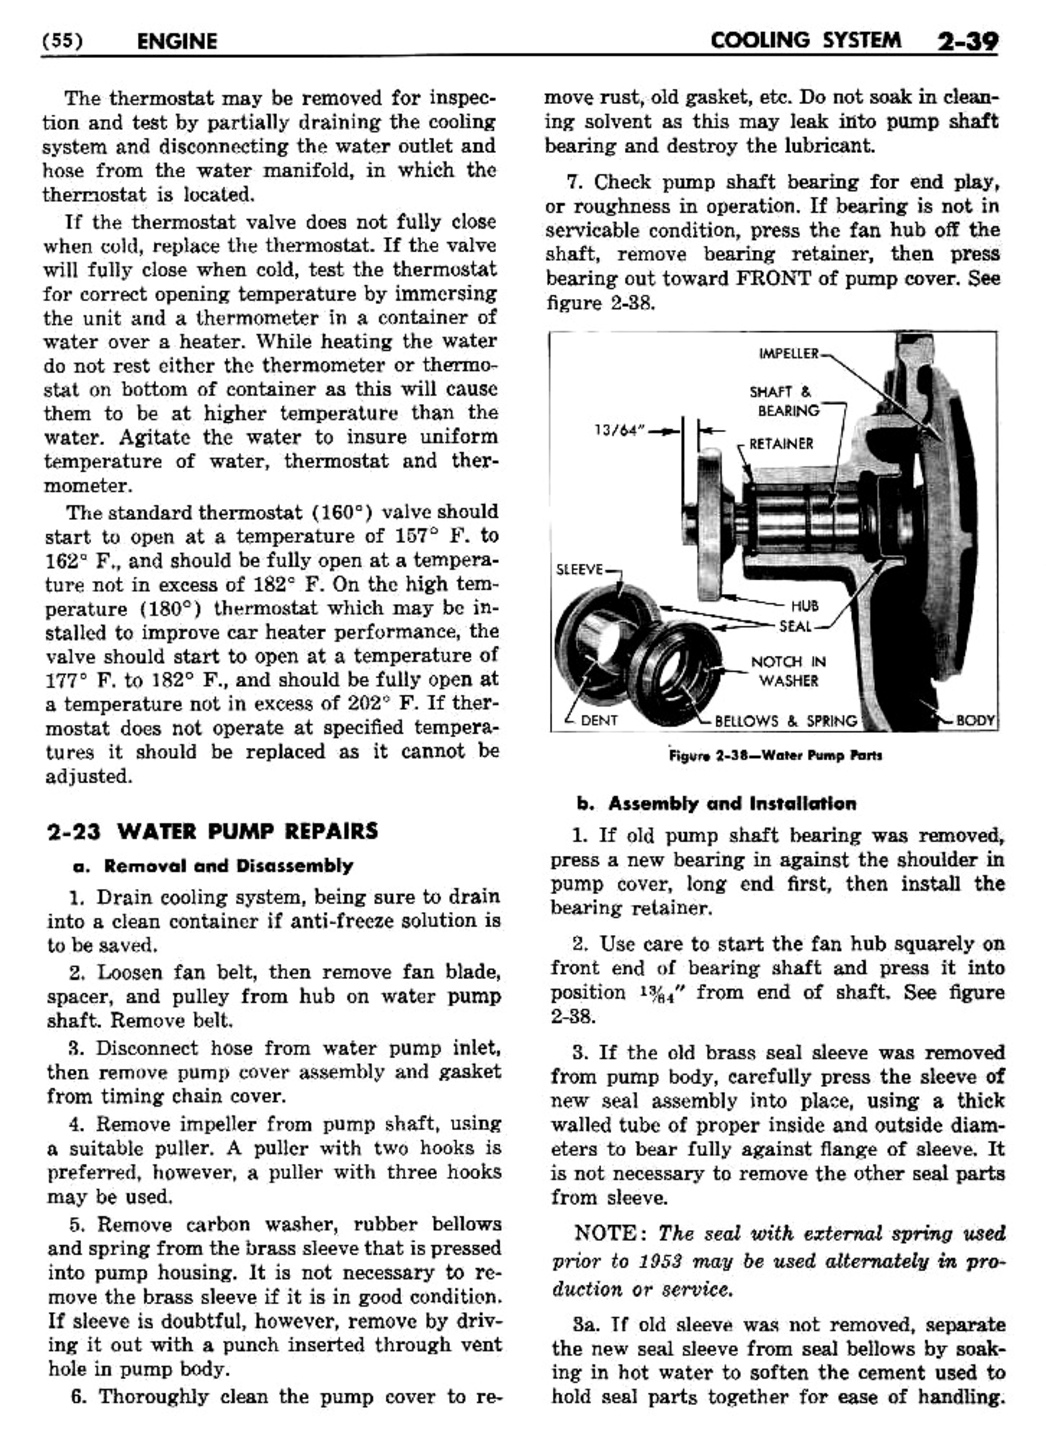 n_03 1955 Buick Shop Manual - Engine-039-039.jpg